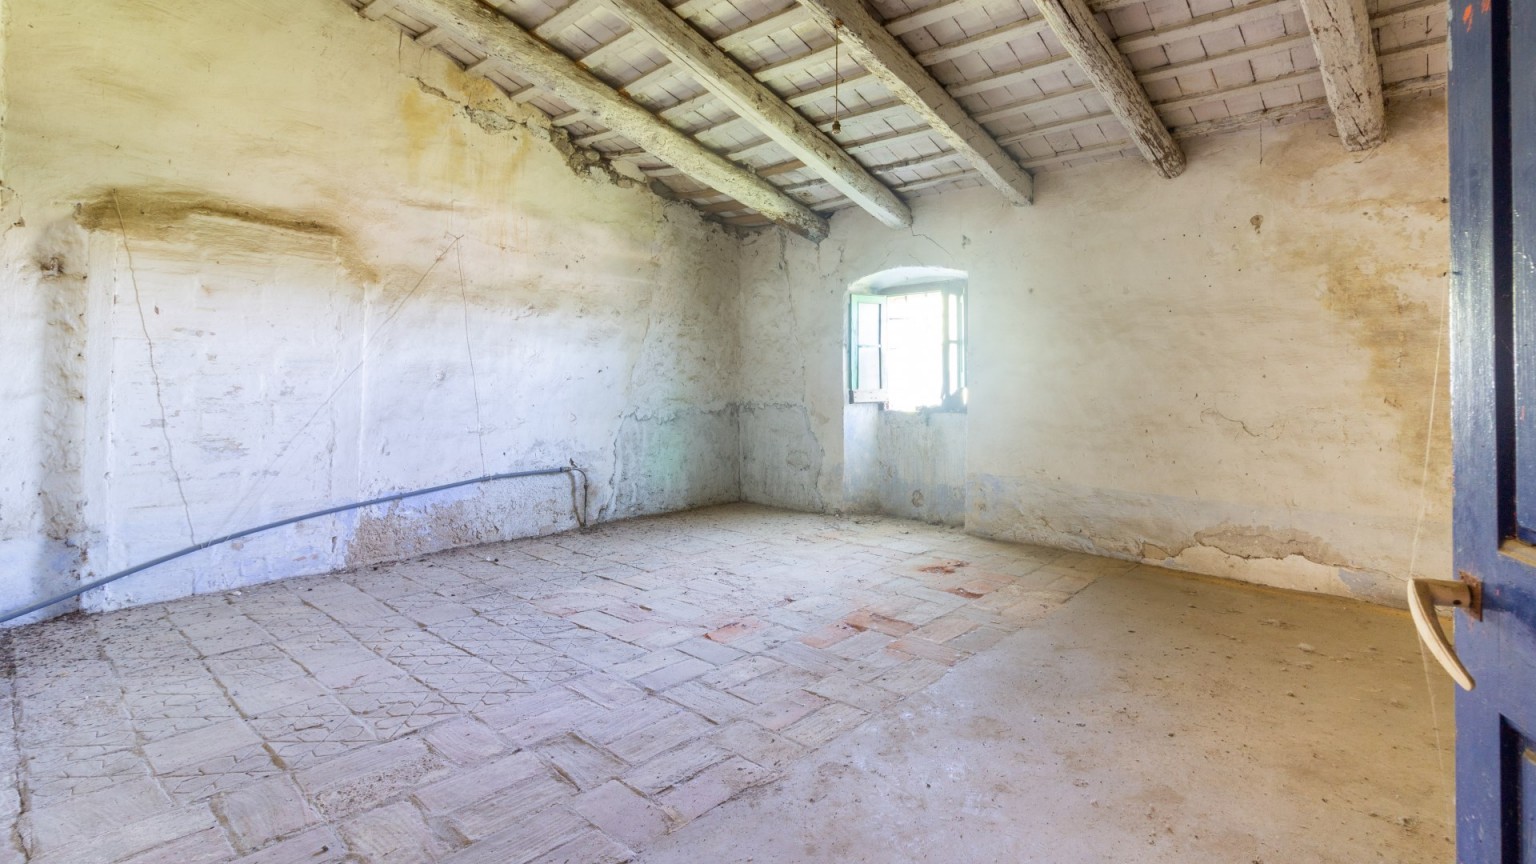 Farmhouse for sale of 427m² in the Palau-Sacosta area of ​​Girona